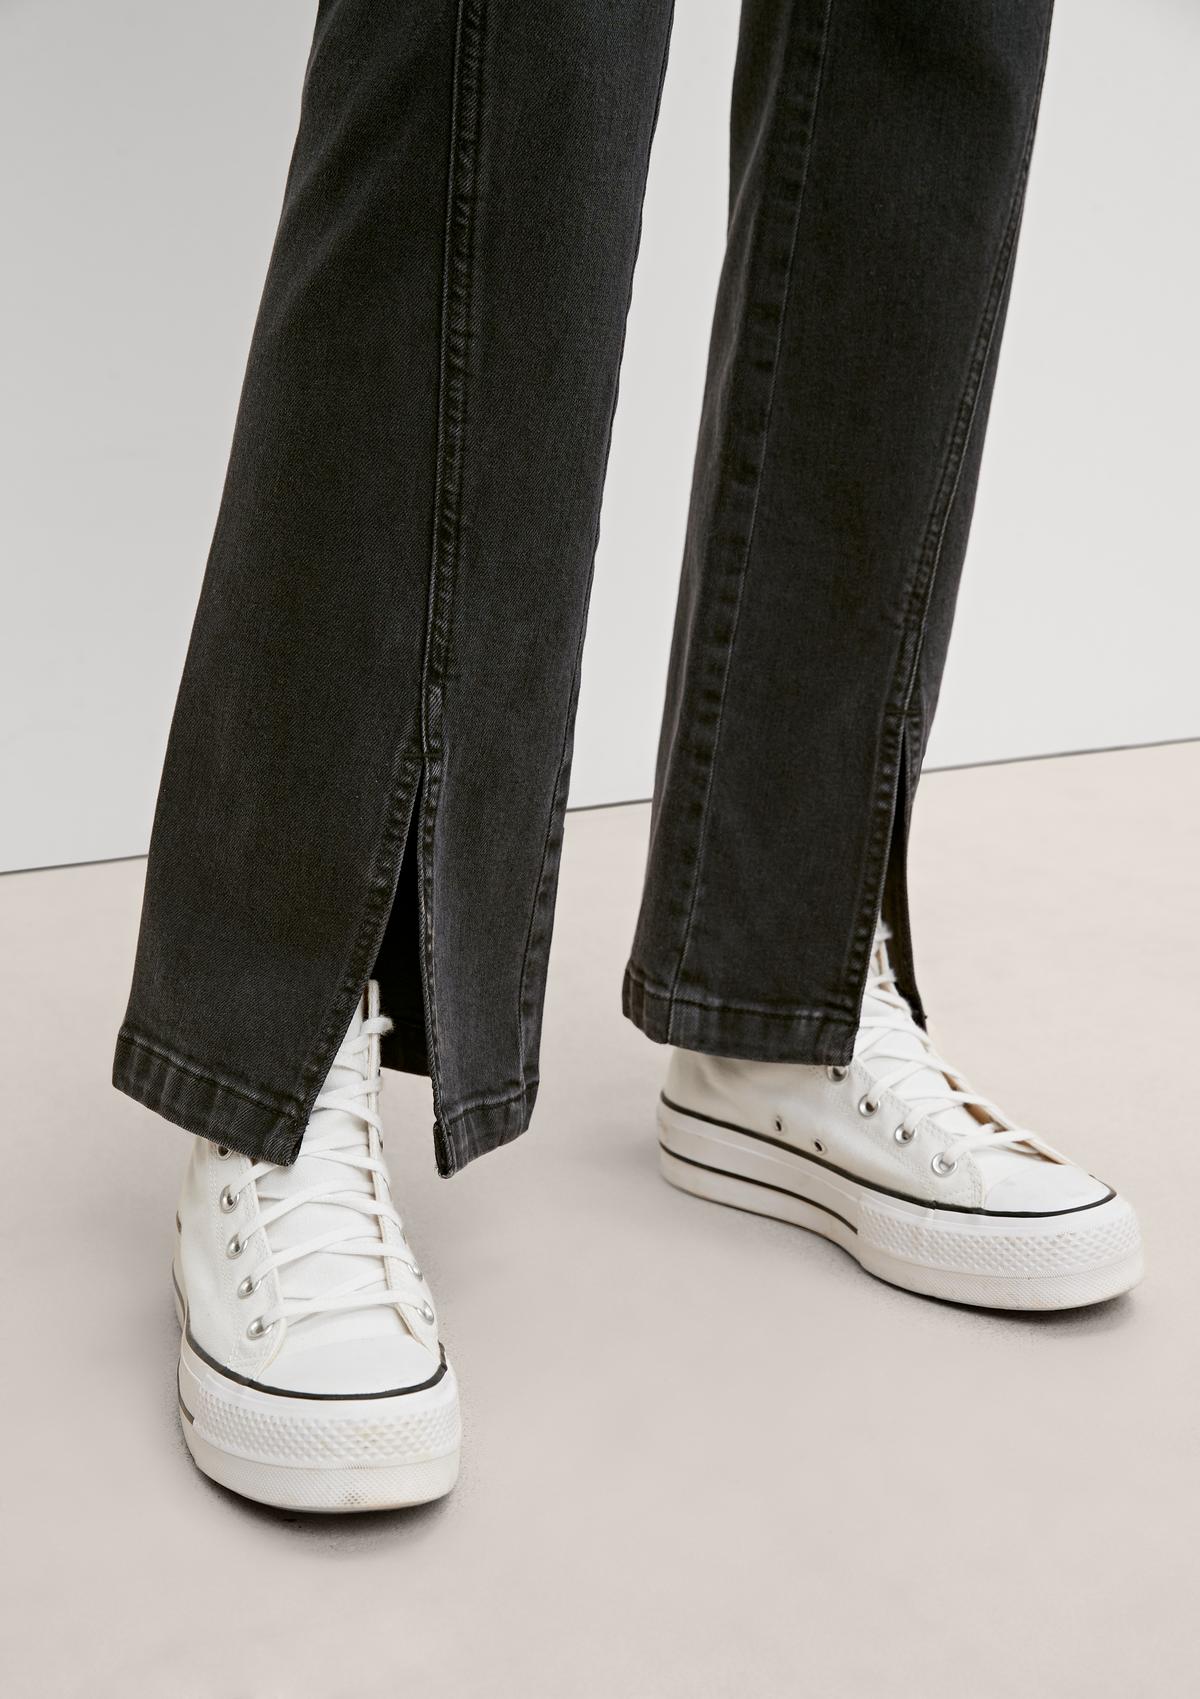 comma Regular: Jeans mit Flared Leg